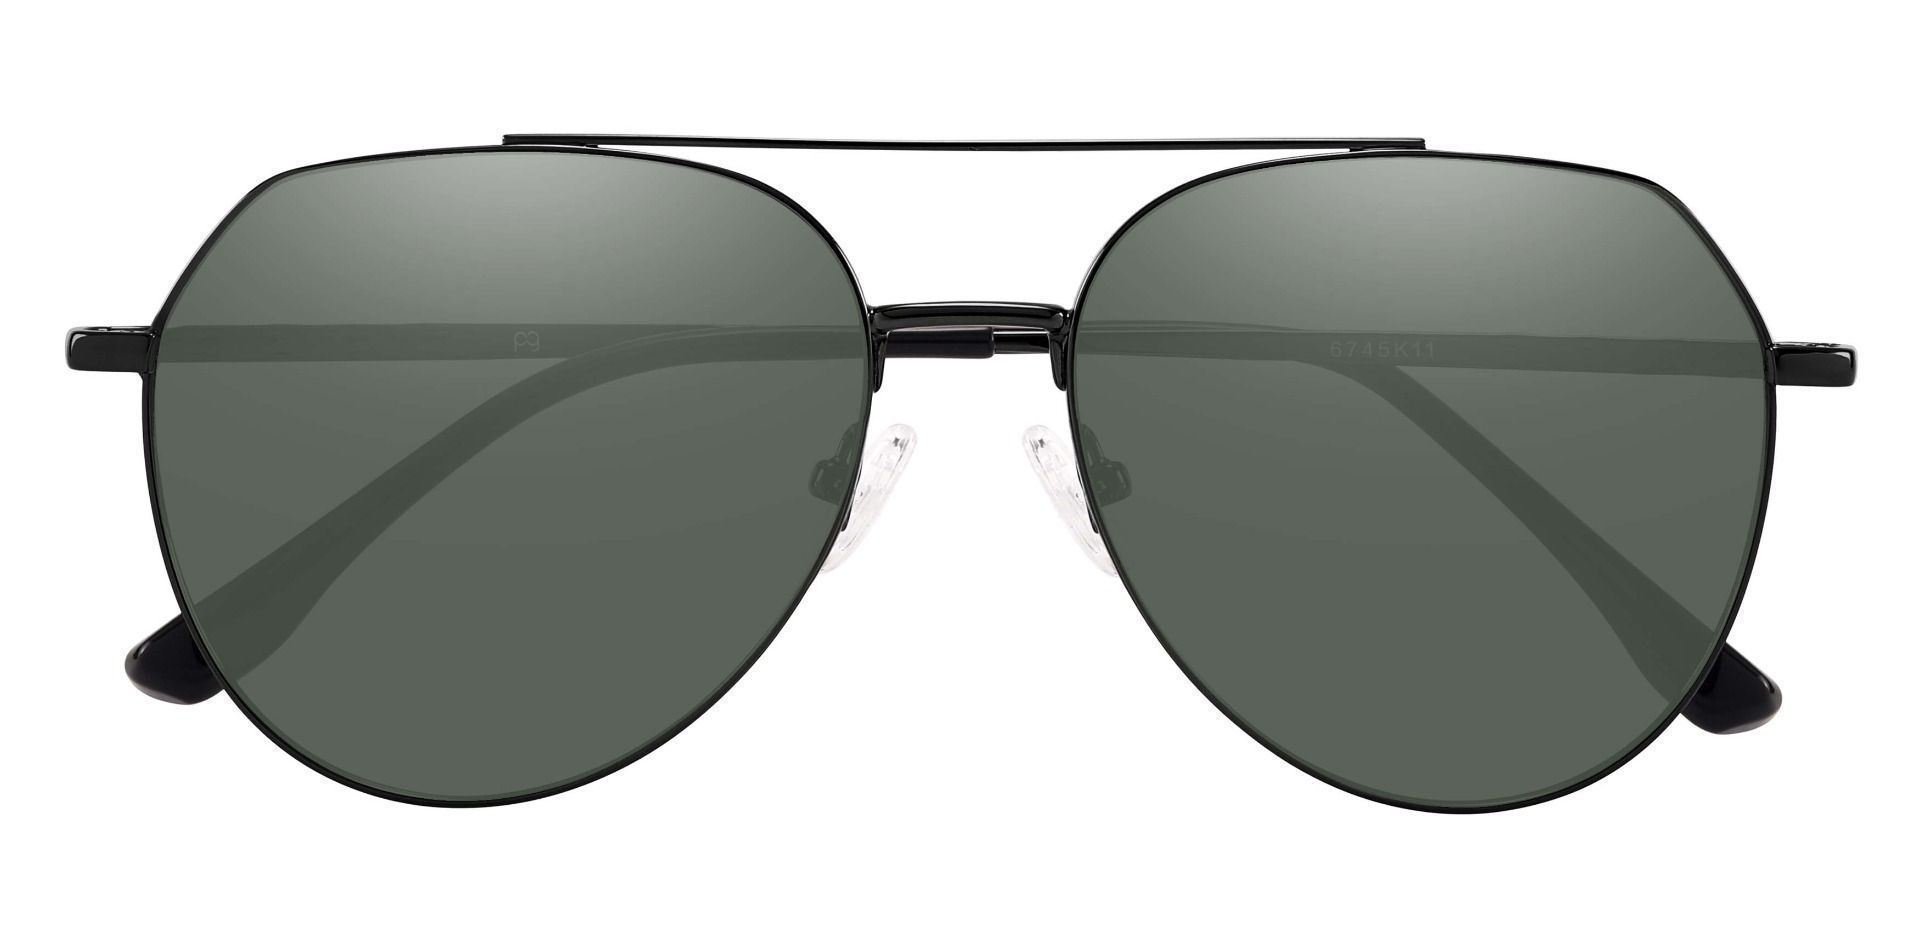 Wexford Aviator Prescription Sunglasses - Black Frame With Green Lenses ...